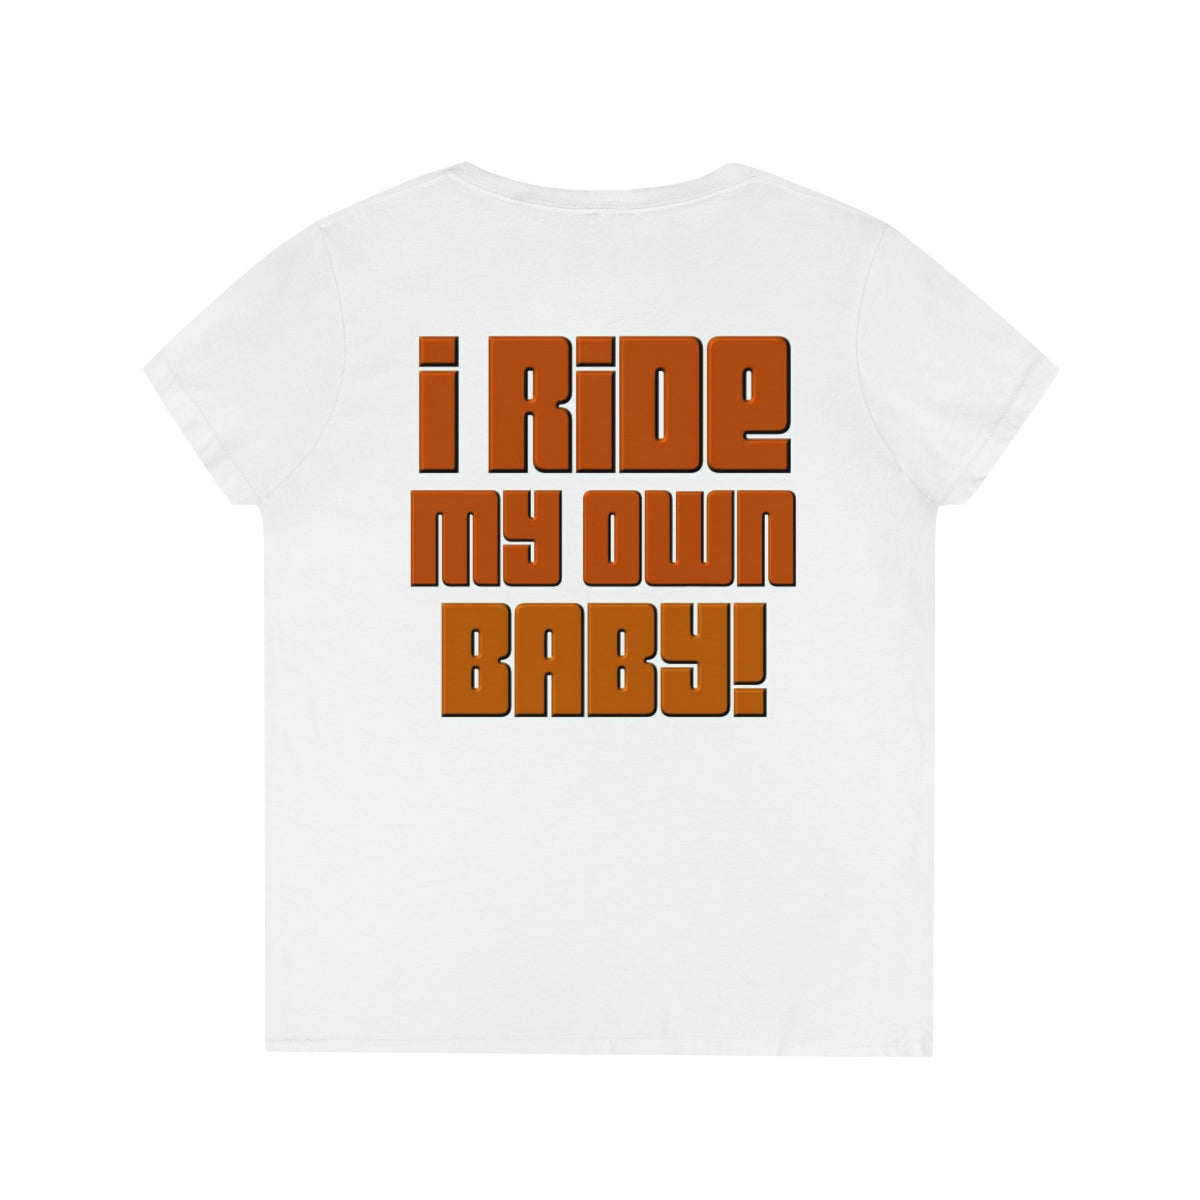 Ladies' V-Neck Bagger Babe T-Shirt (Orange Letters)